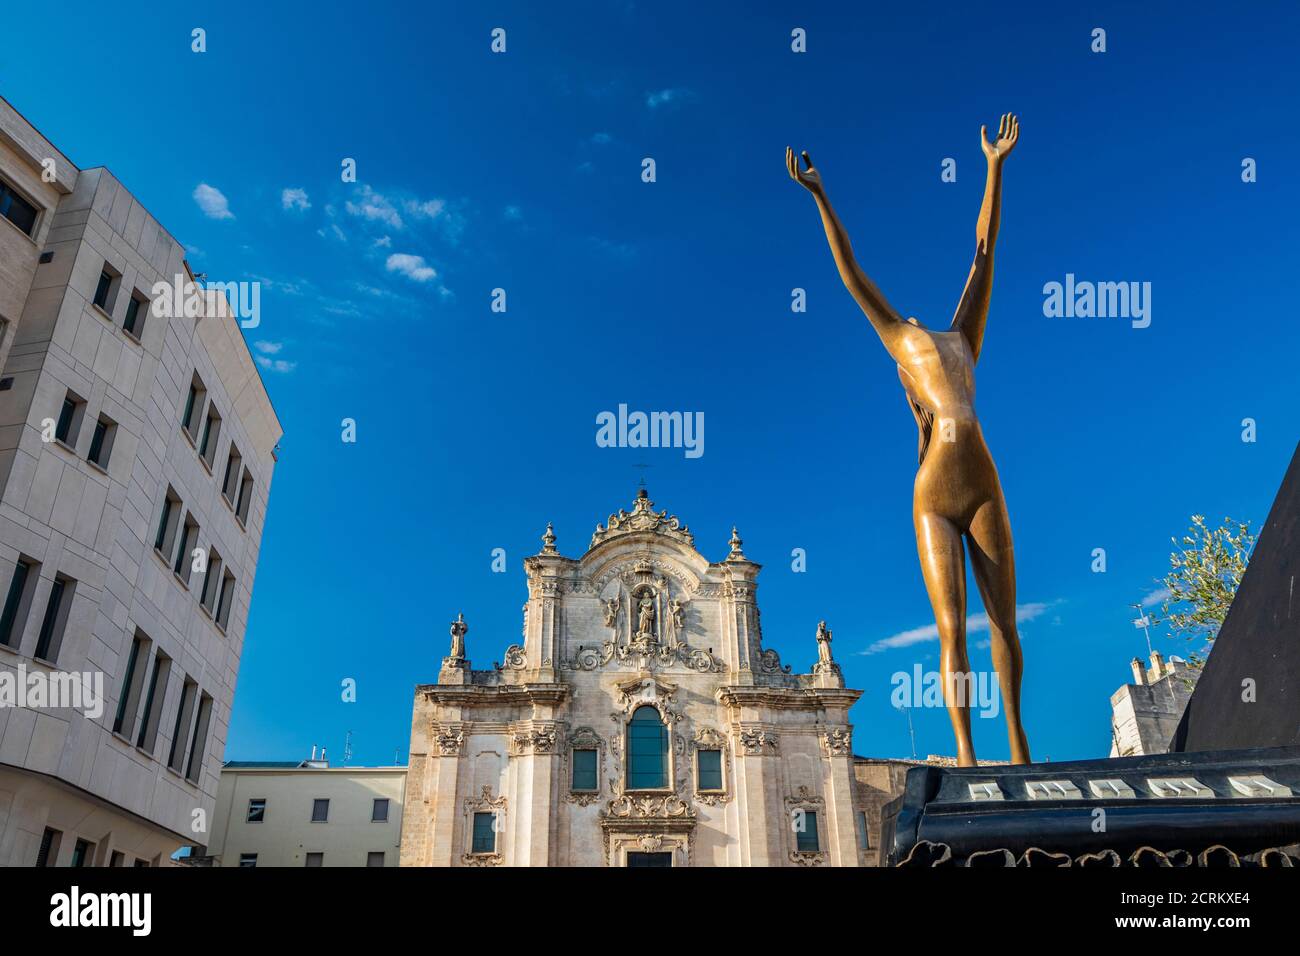 August 8, 2020 - Matera, Basilicata, Italy - The church of San Francesco d'Assisi, in Baroque style. Salvador Dalì's sculpture: the Dancing Piano. Wom Stock Photo